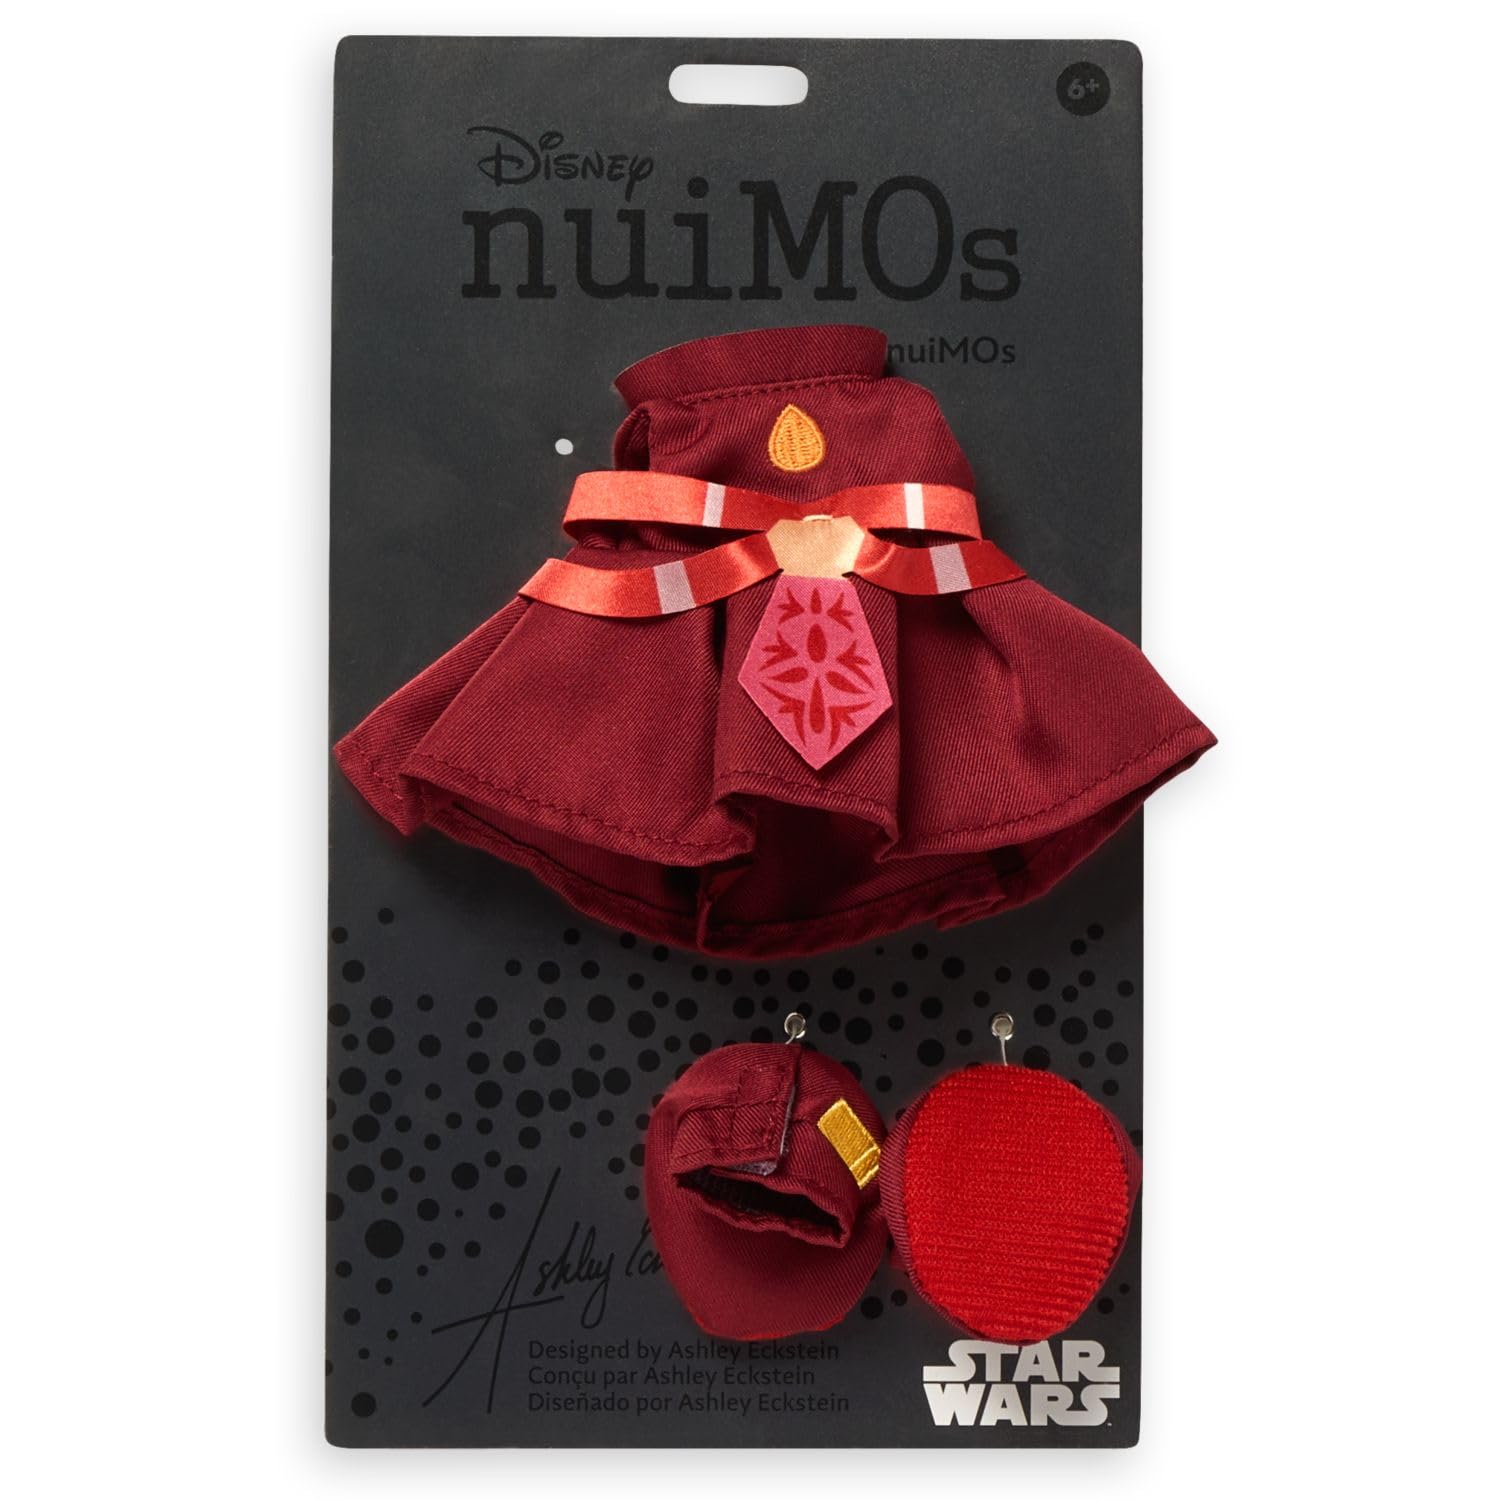 Disney nuiMOs Ahsoka Tano Inspired Outfit by Ashley Eckstein